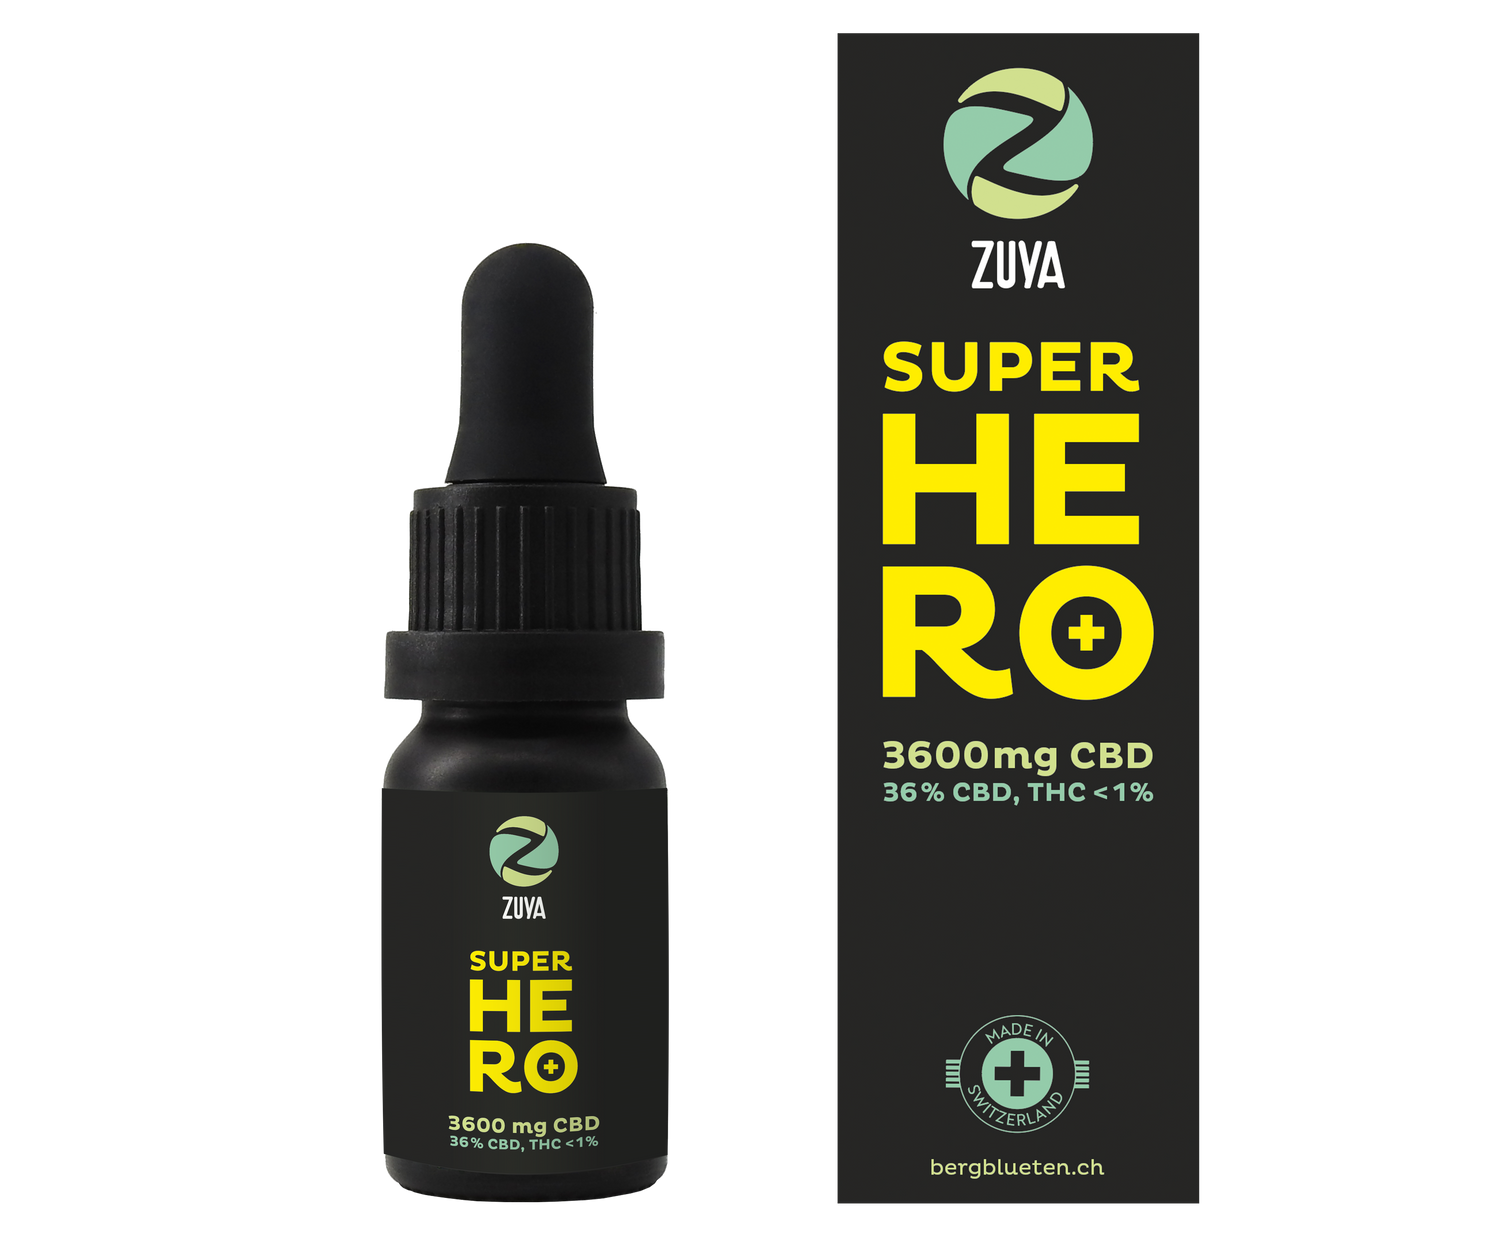 Zuya Super Hero 36% CBD huile parfumée